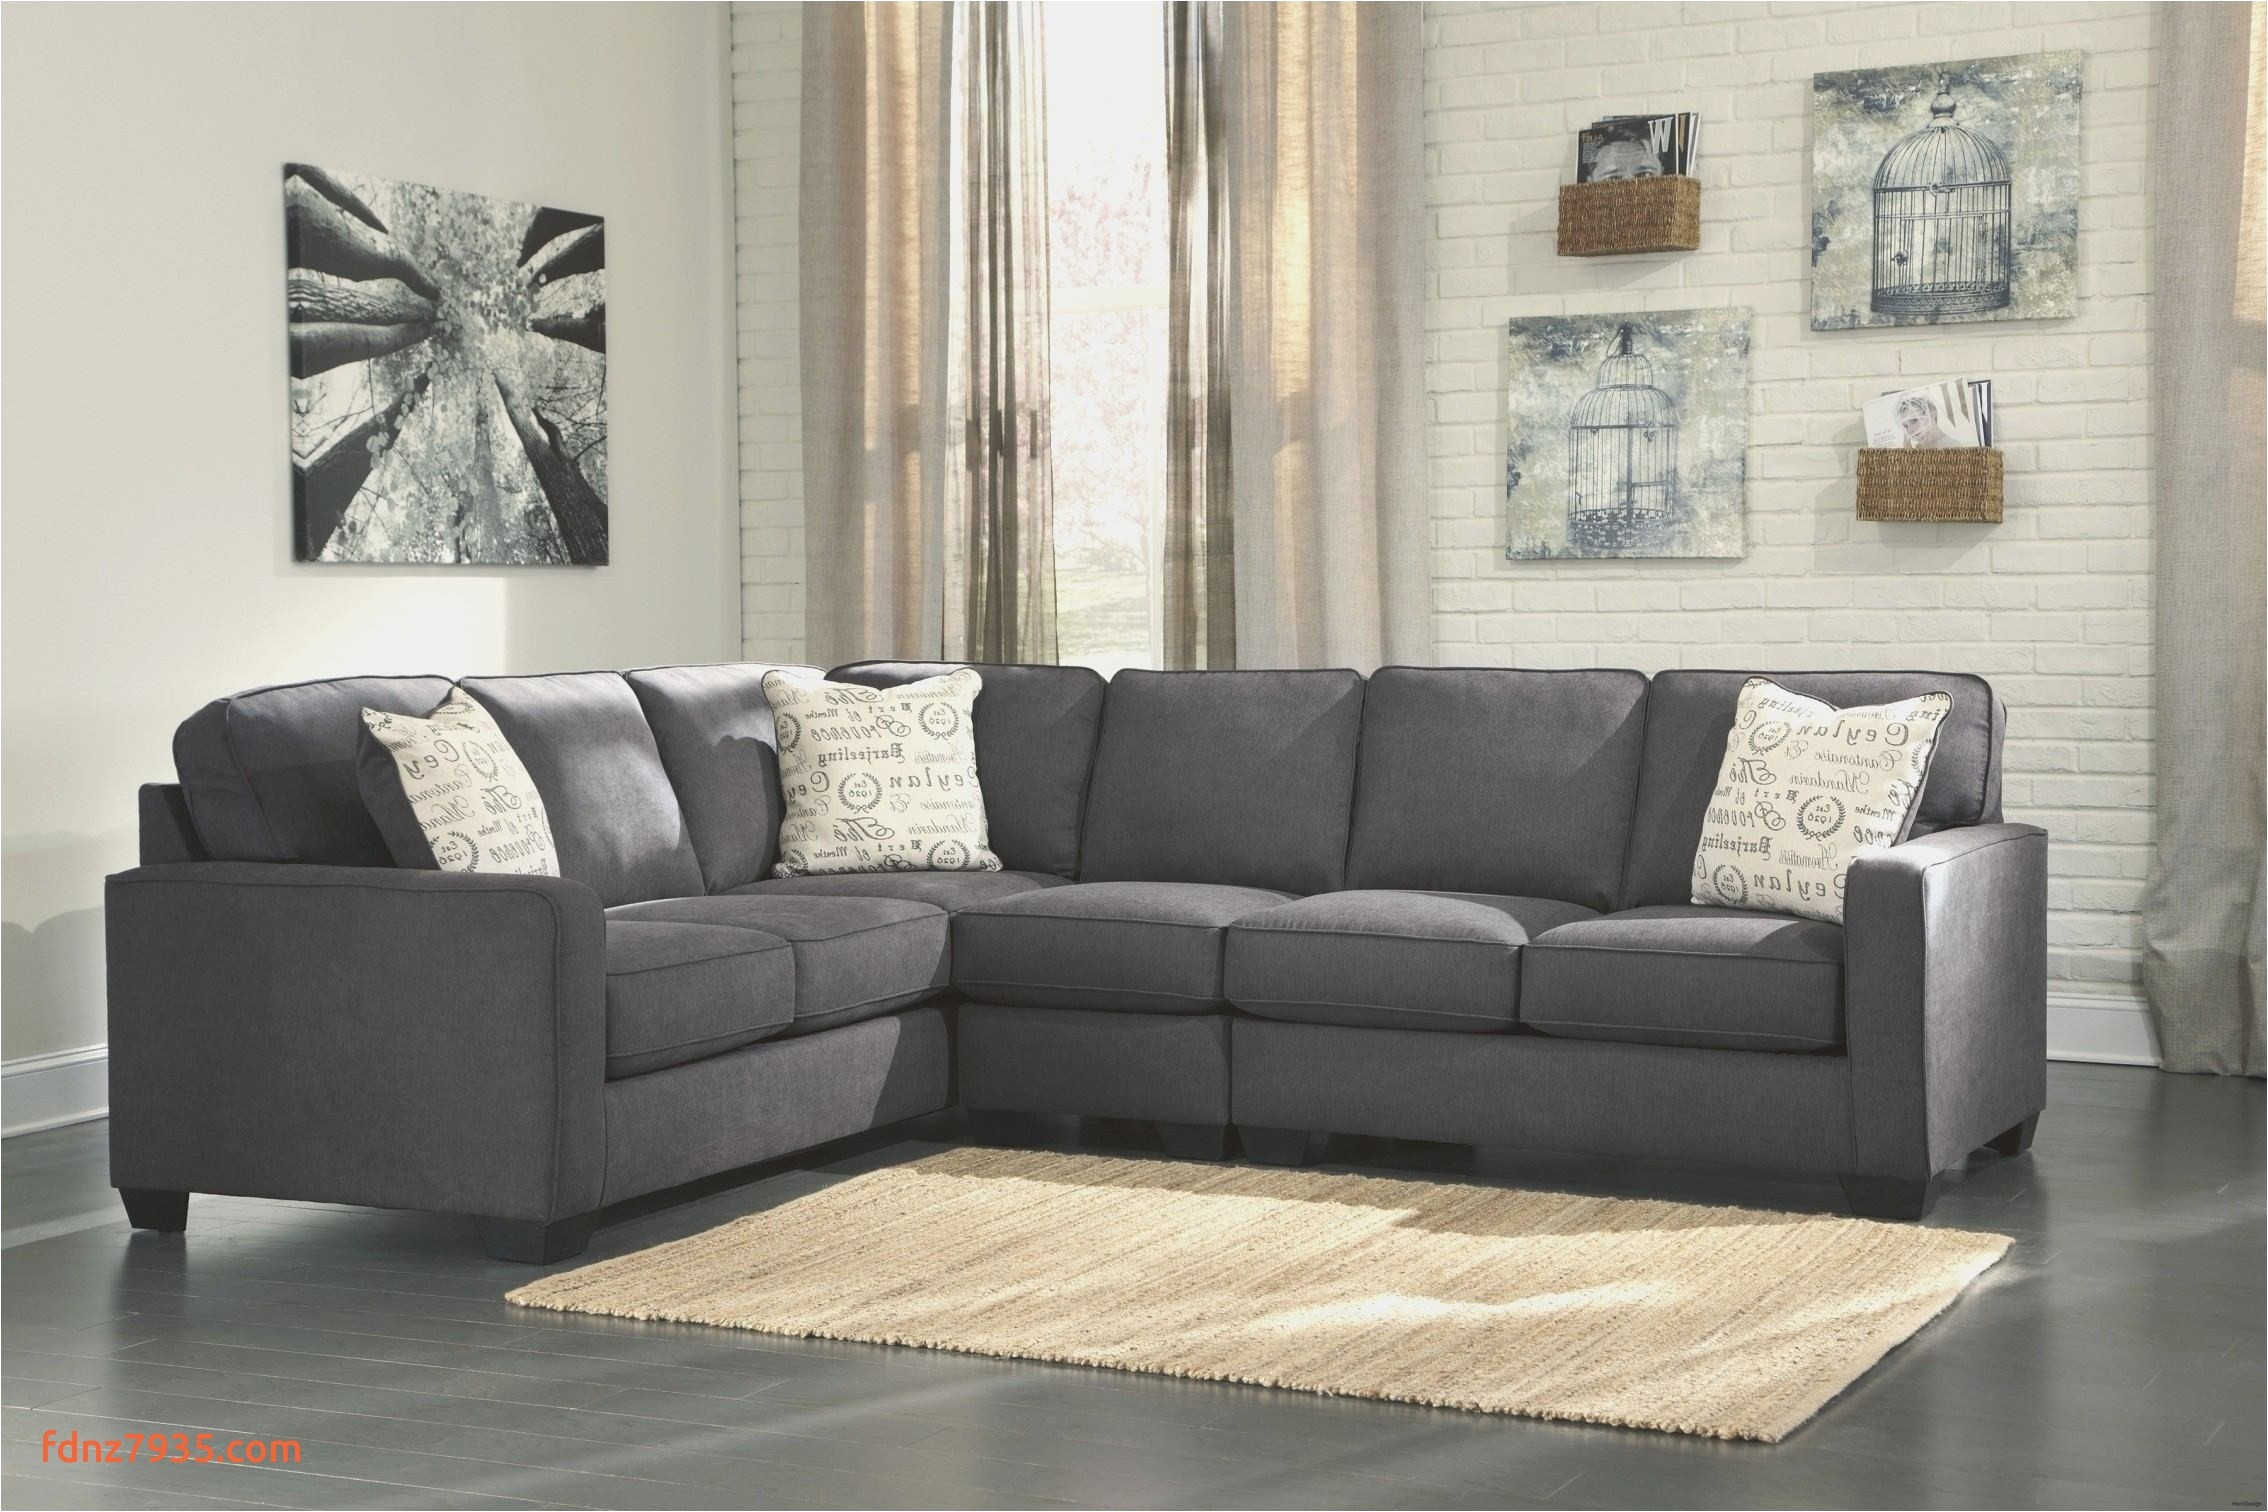 american freight sectional sofas sectional sofas okc fresh sofa design hd